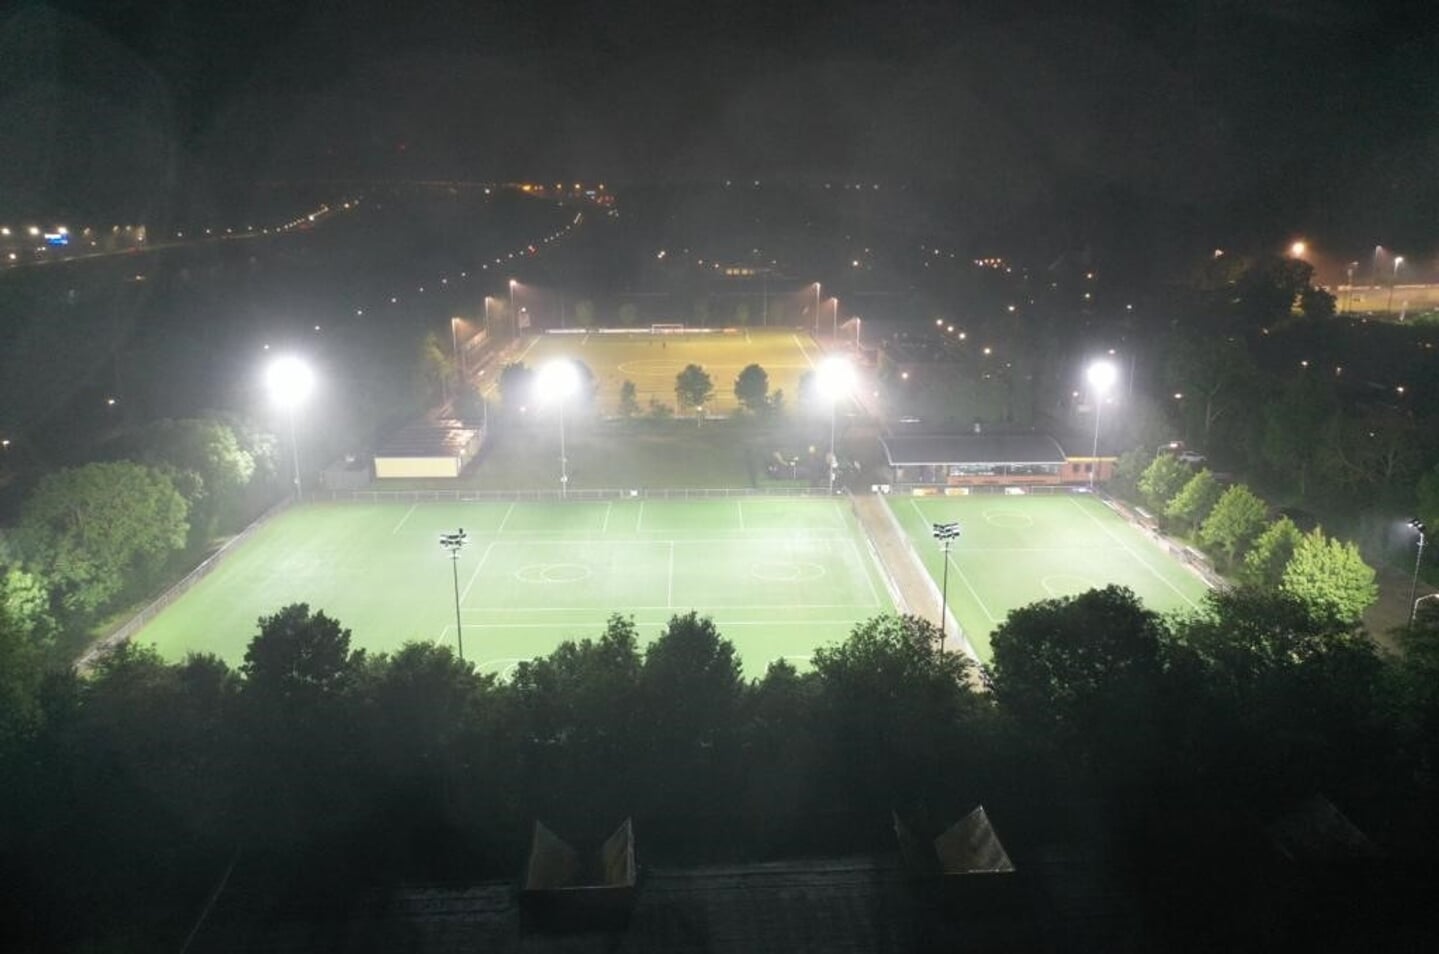 LED-sportveldverlichting wordt in Gorinchem versneld aangelegd